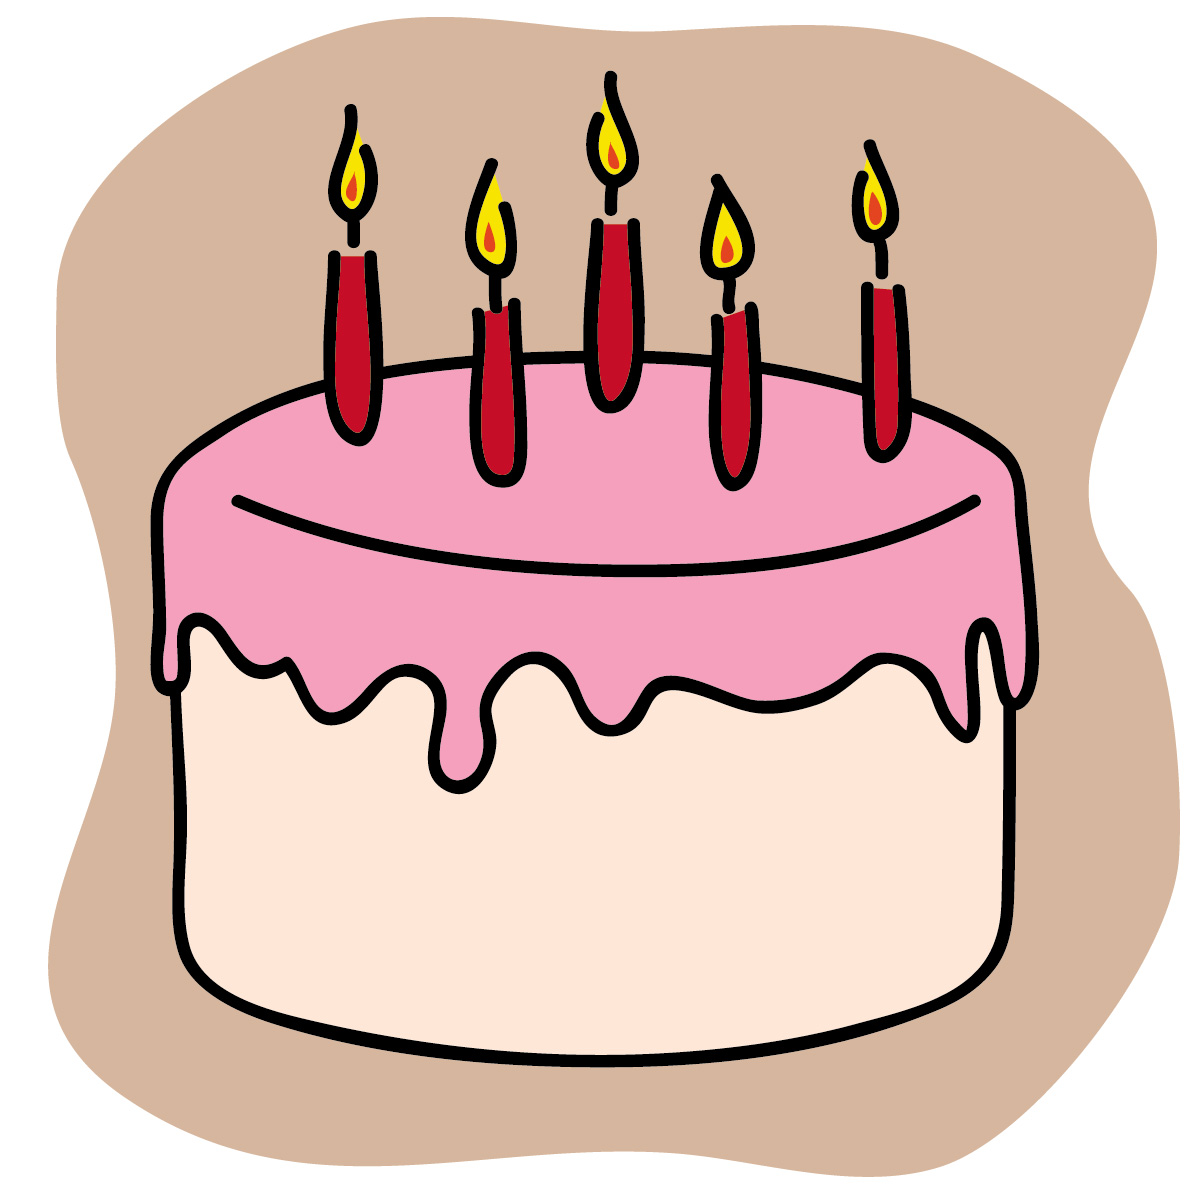 Birthday Cake Clip Art Beautiful and Cute | Happy Birthday Cake To You